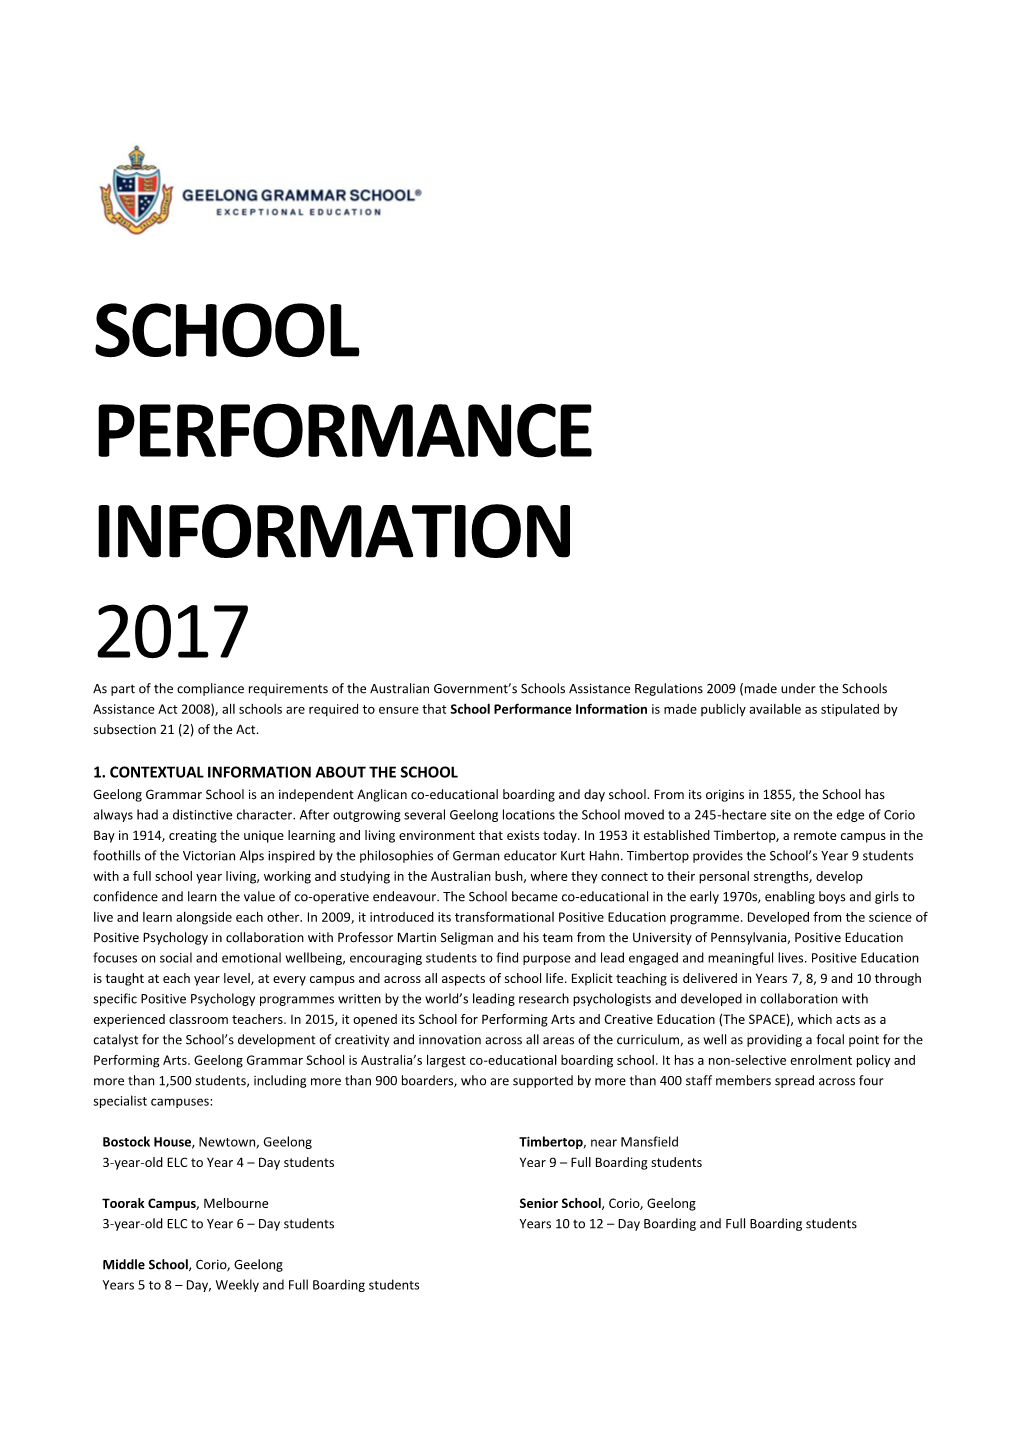 School Performance Information 2017